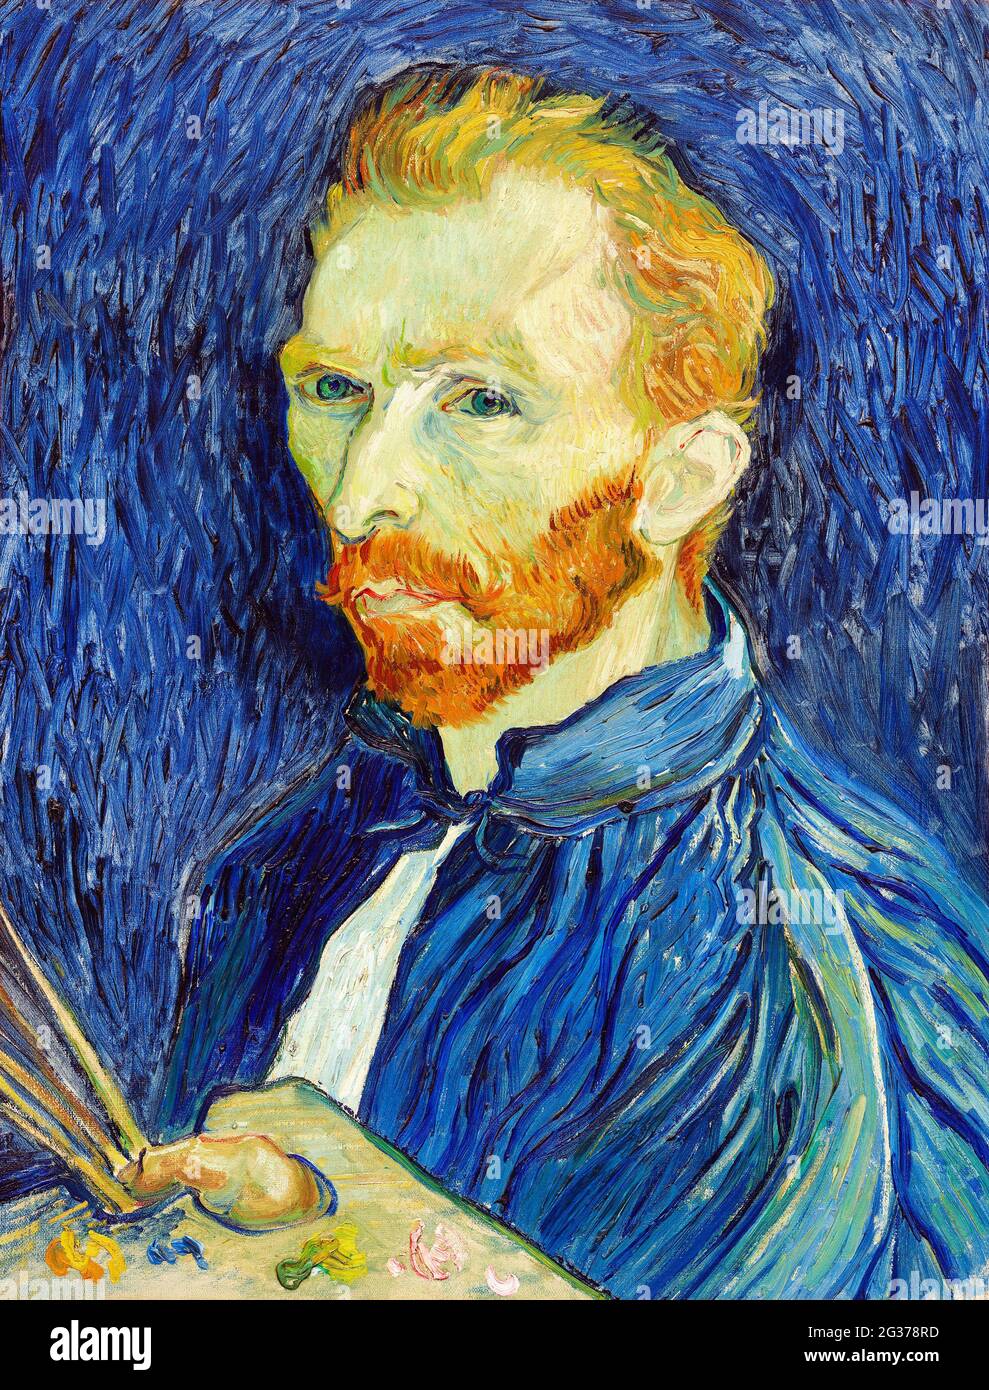 Arte / pittura. Vincent van Gogh (olandese, 1853 - 1890), Autoritratto, 1889, olio su tela. Foto Stock